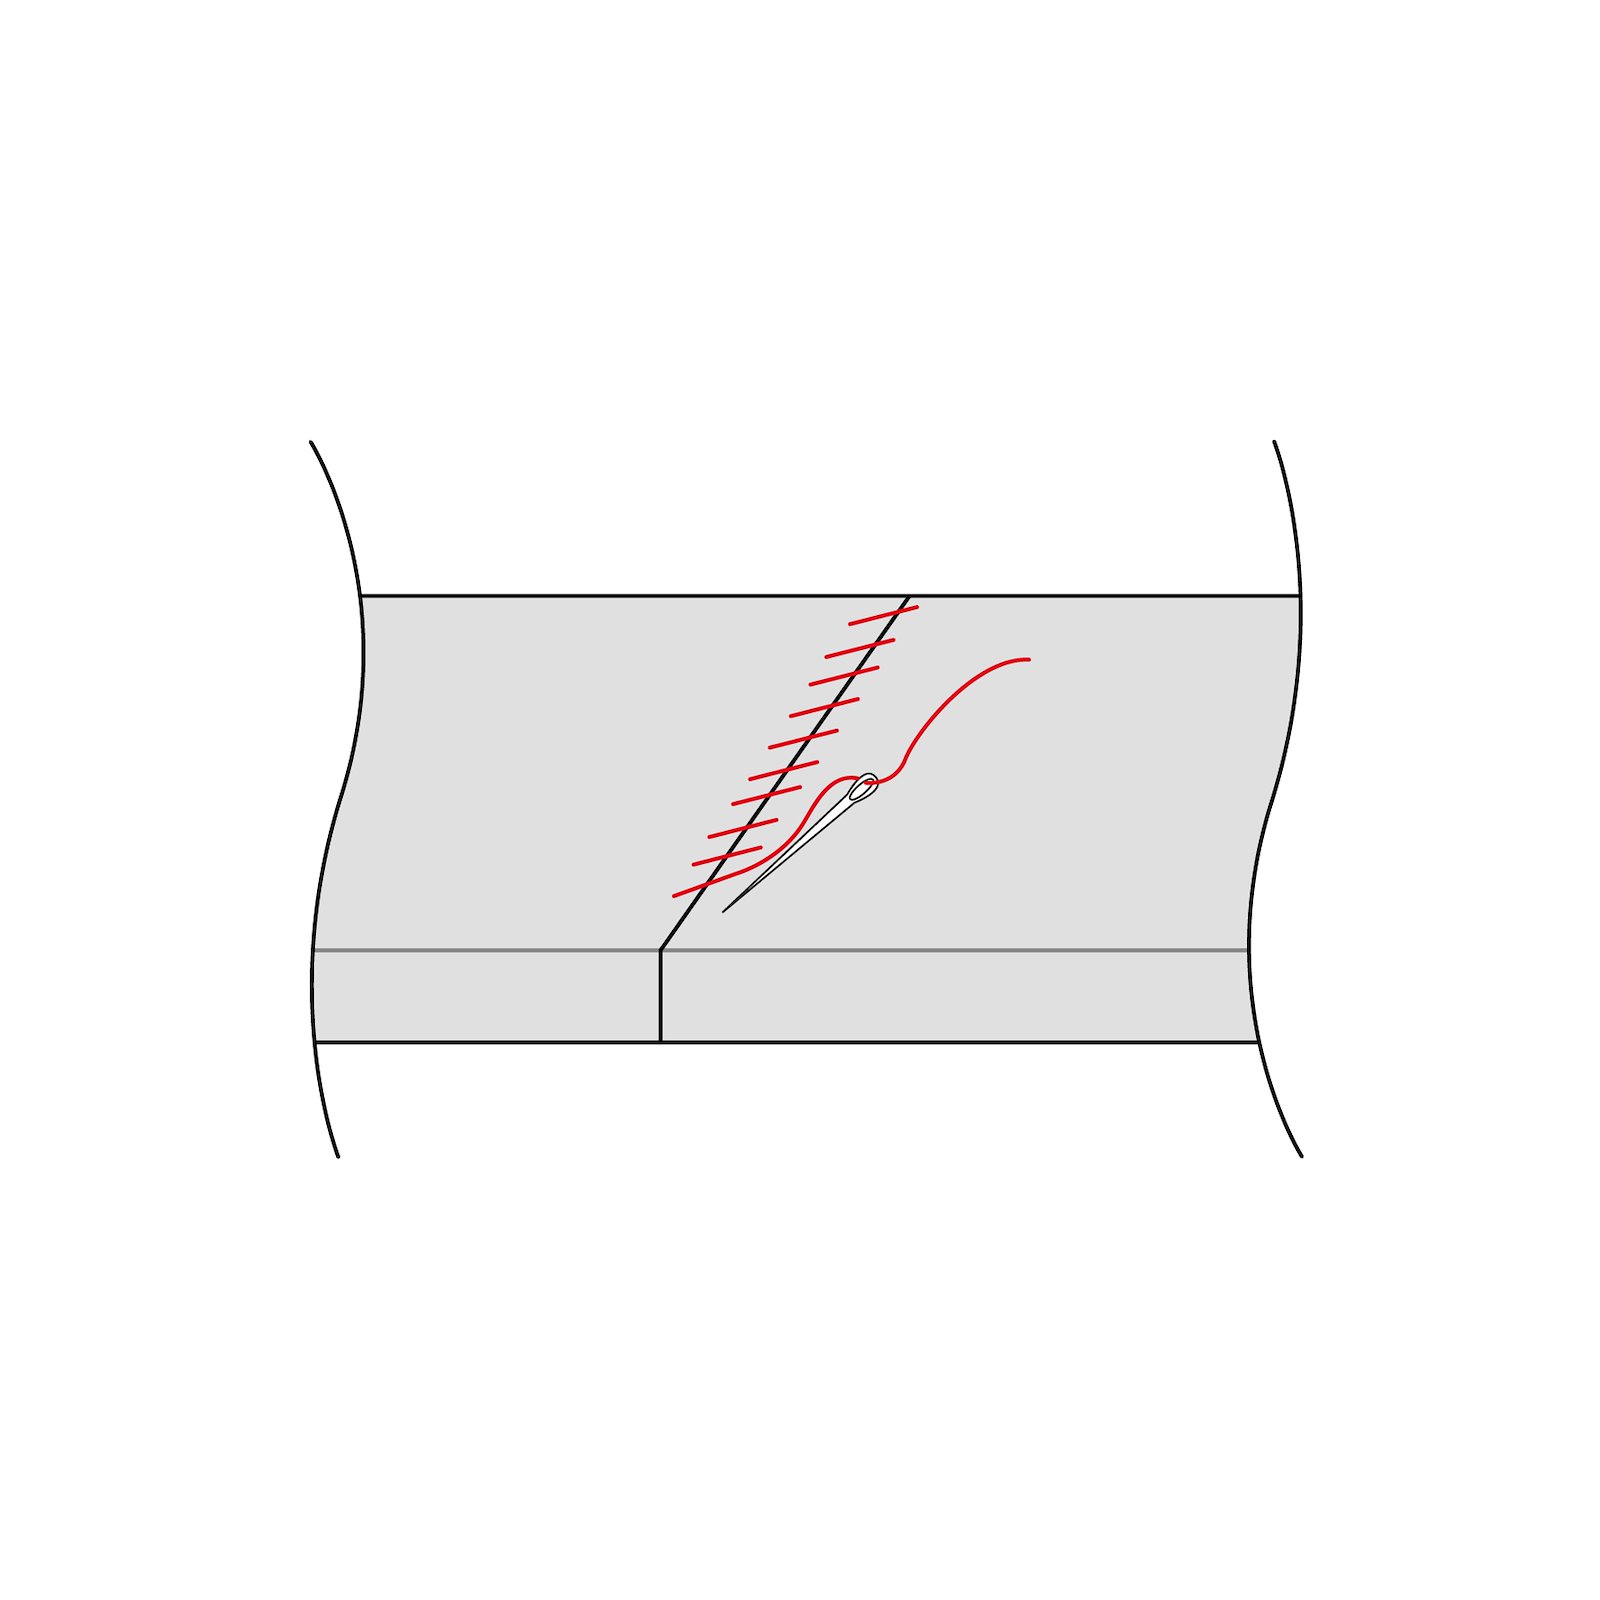 Sewing pattern: Crib bumper Diy3004-step5.jpg